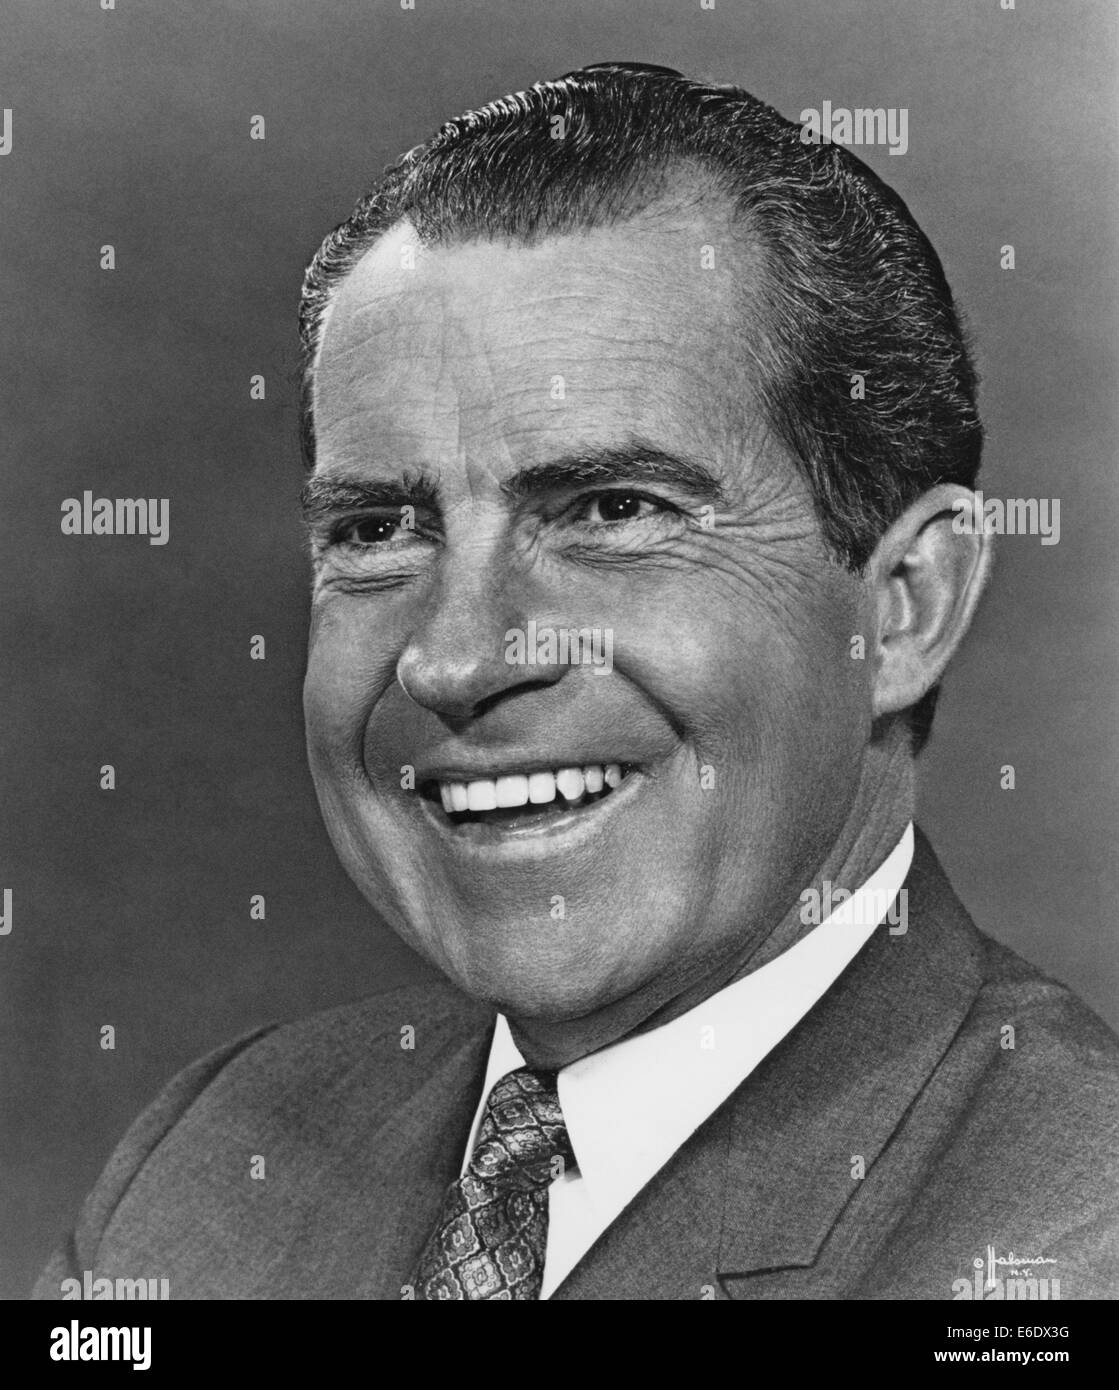 Richard M. Nixon (1913-1994), 37th President of the United States, Smiling Portrait, 1969 Stock Photo